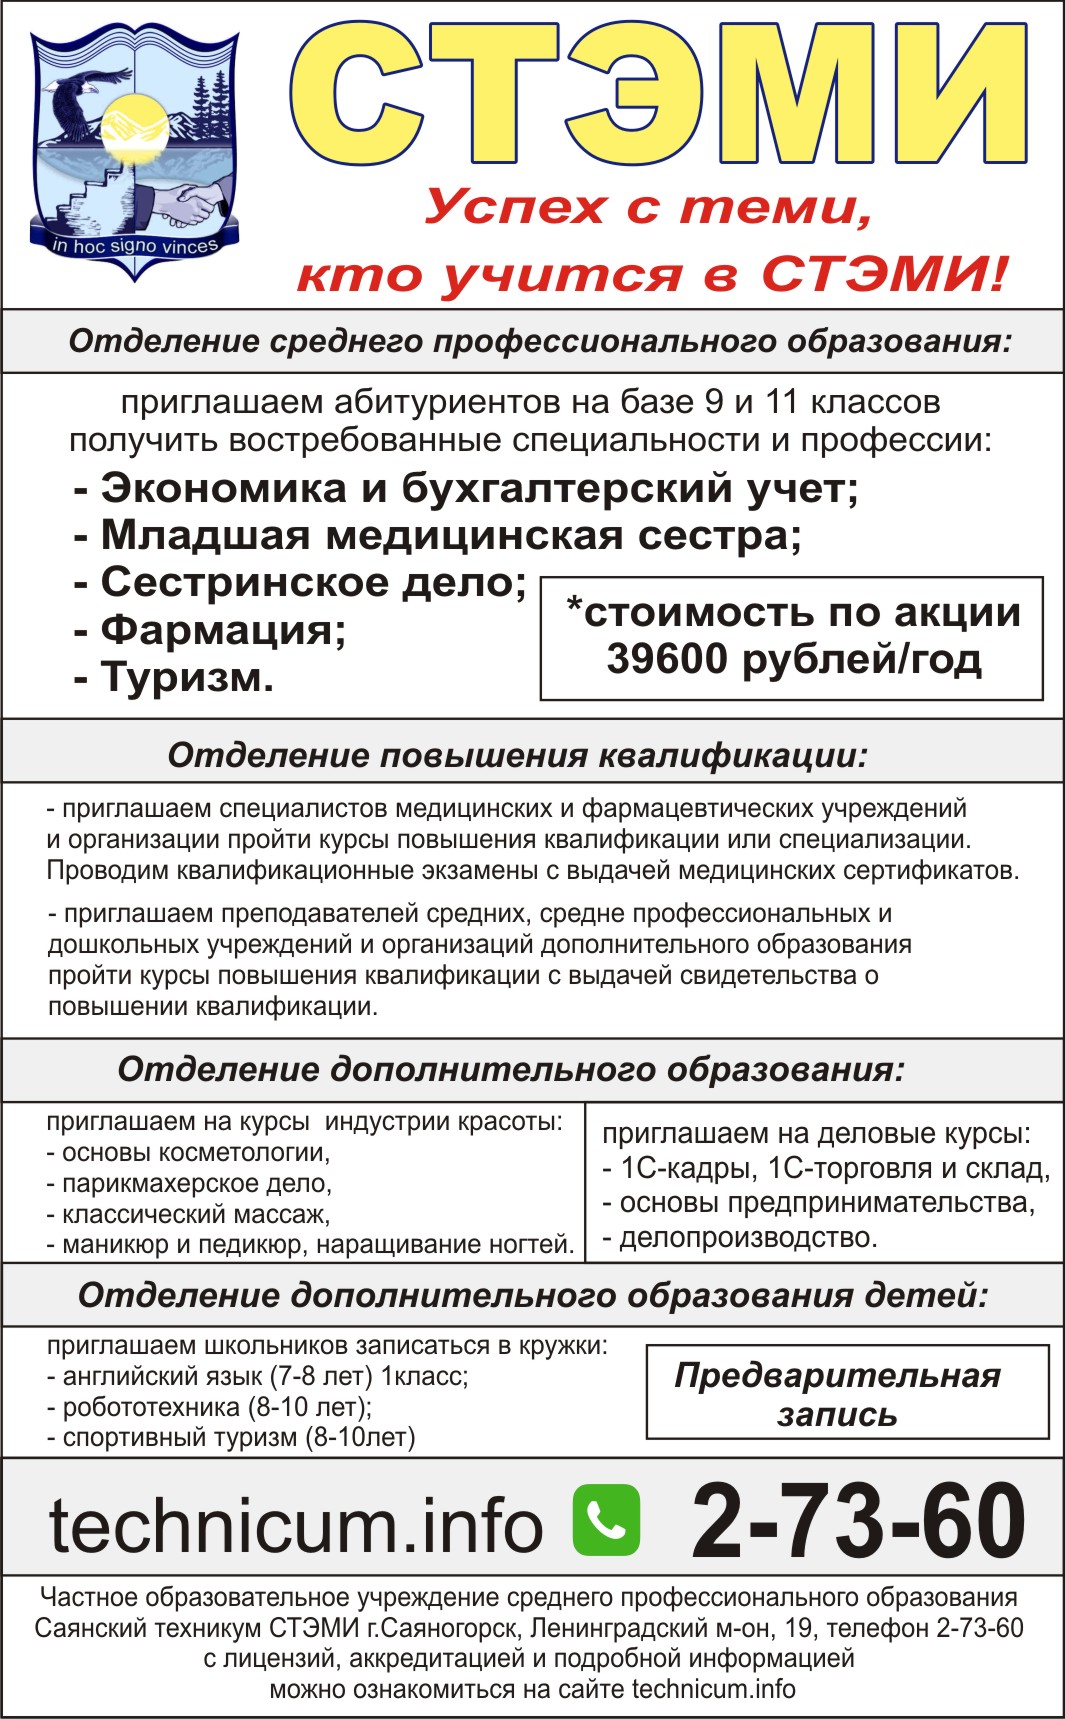 Саяногорск Инфо - reklama-gazety-2016.jpg, Скачано: 294